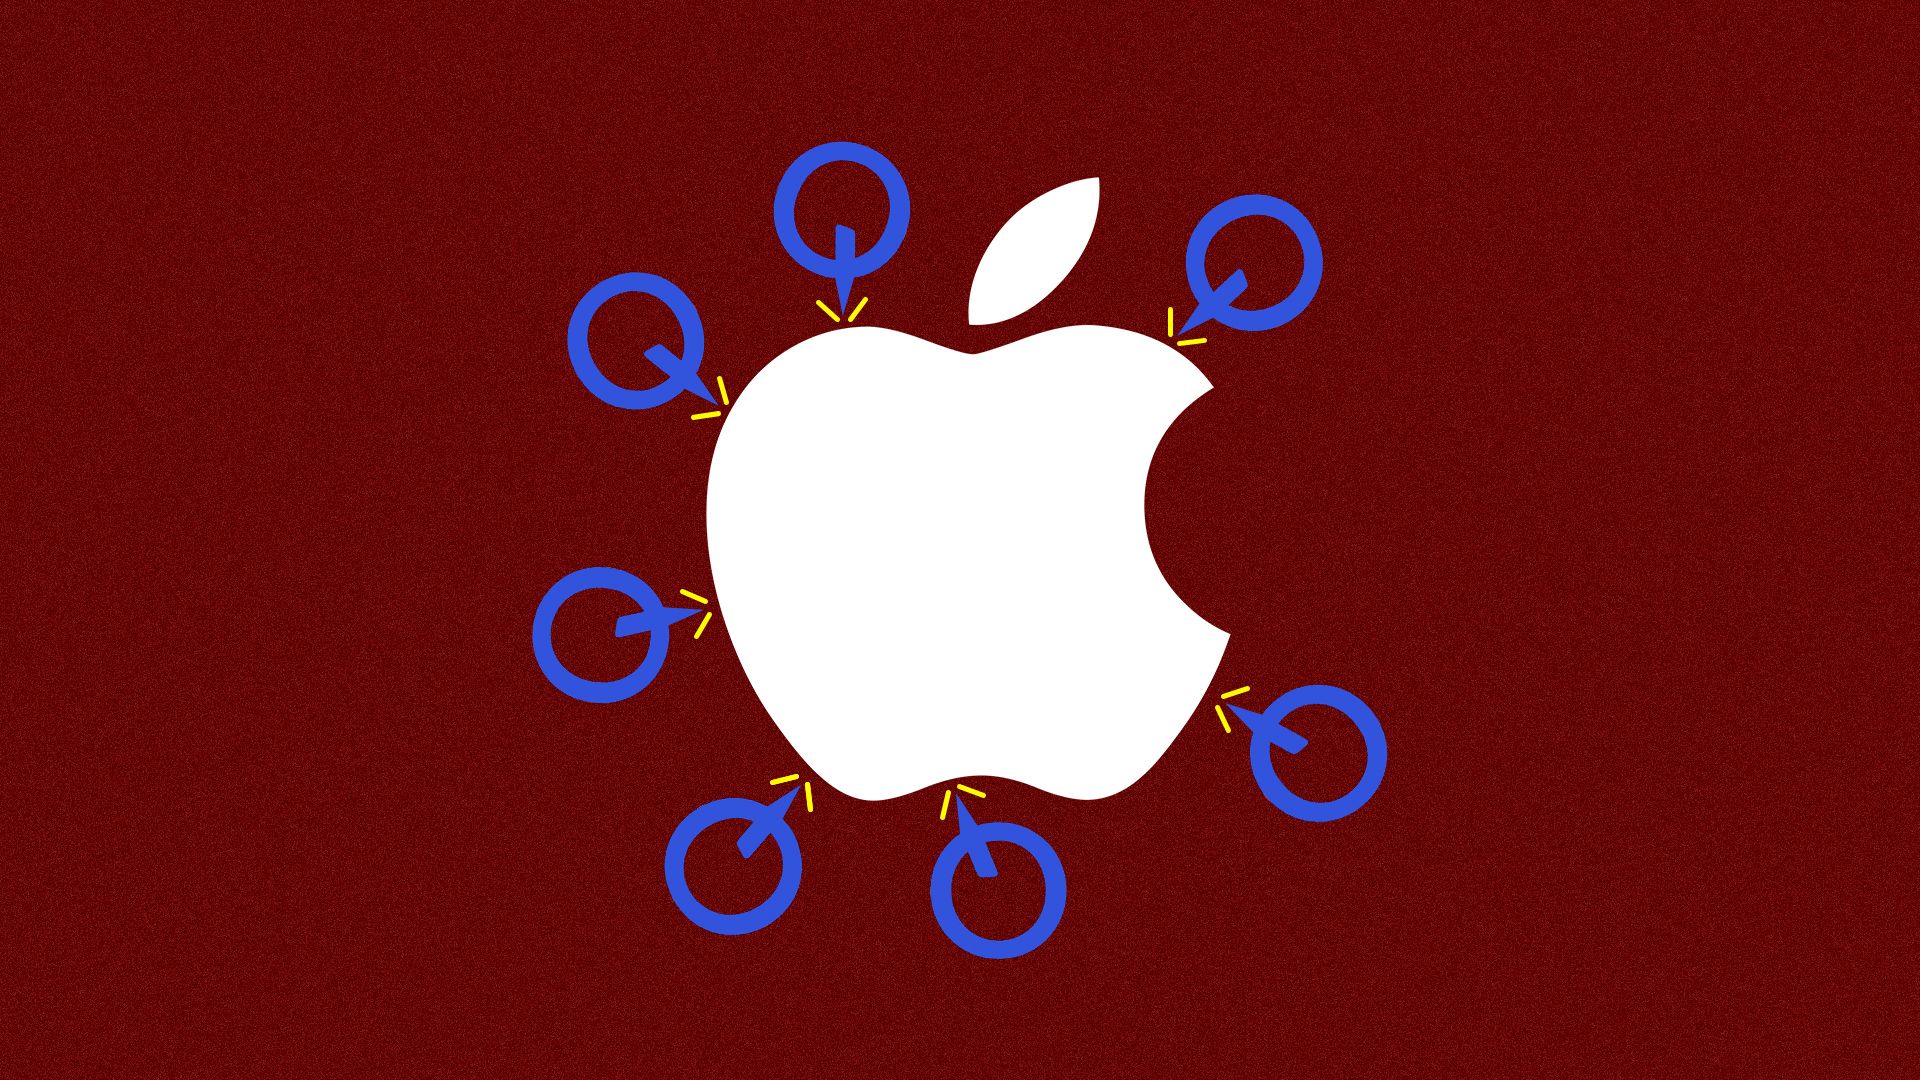 Illustration of Qualcomm logos attacking Apple logos